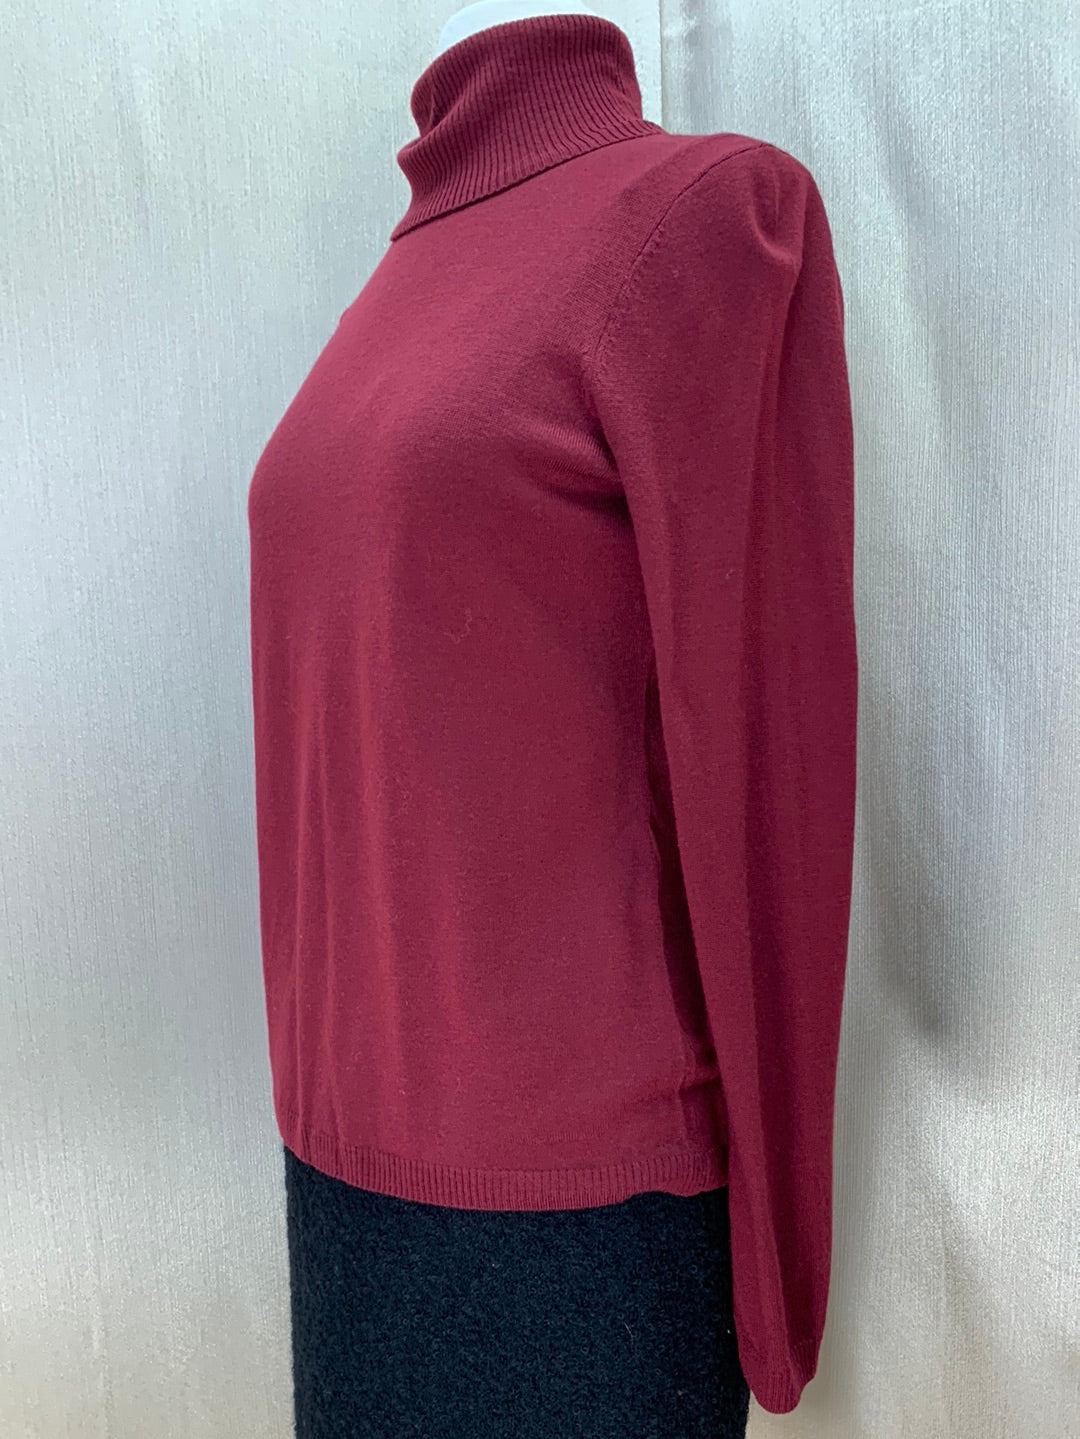 PENDLETON maroon red Merino Wool Long Sleeve Turtleneck Sweater - S